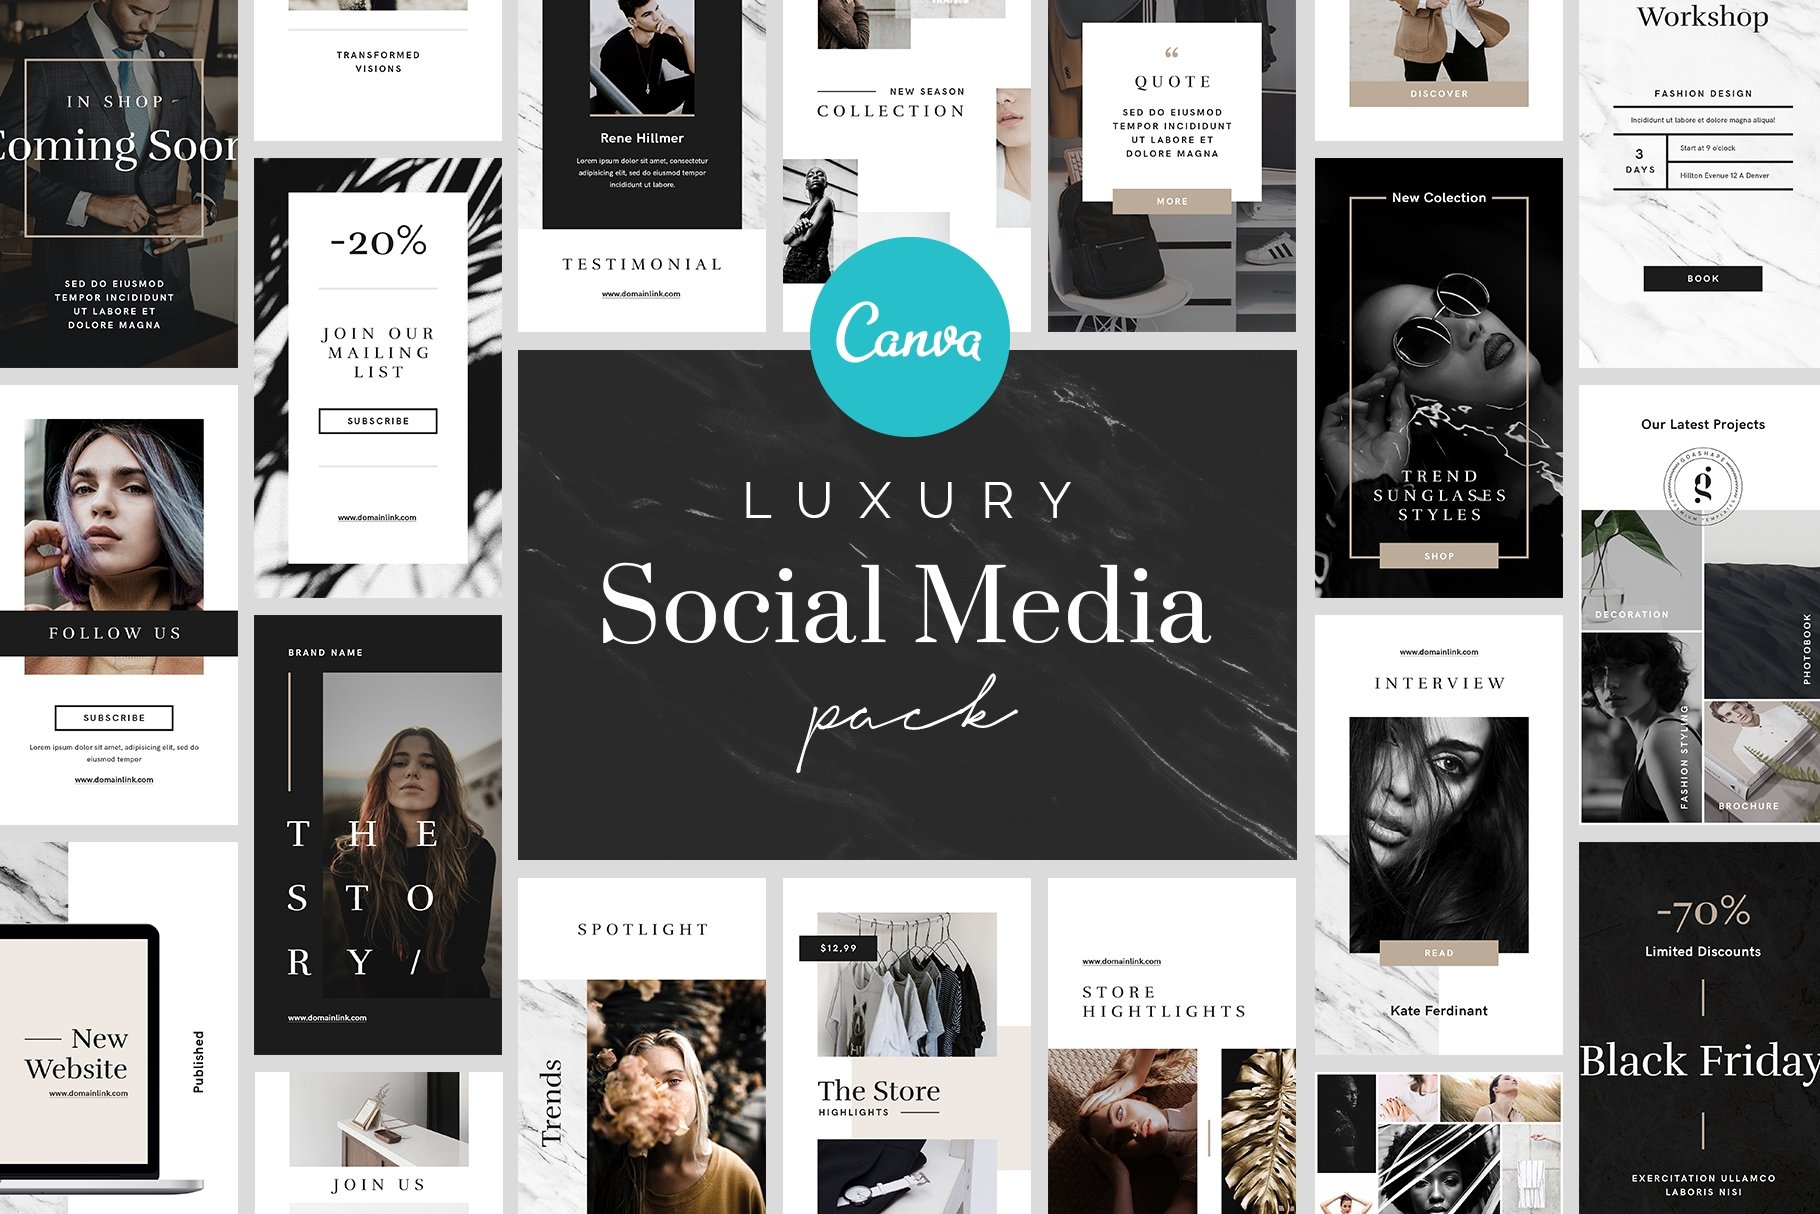 Canva Luxury Socia Media Instagram cover image.